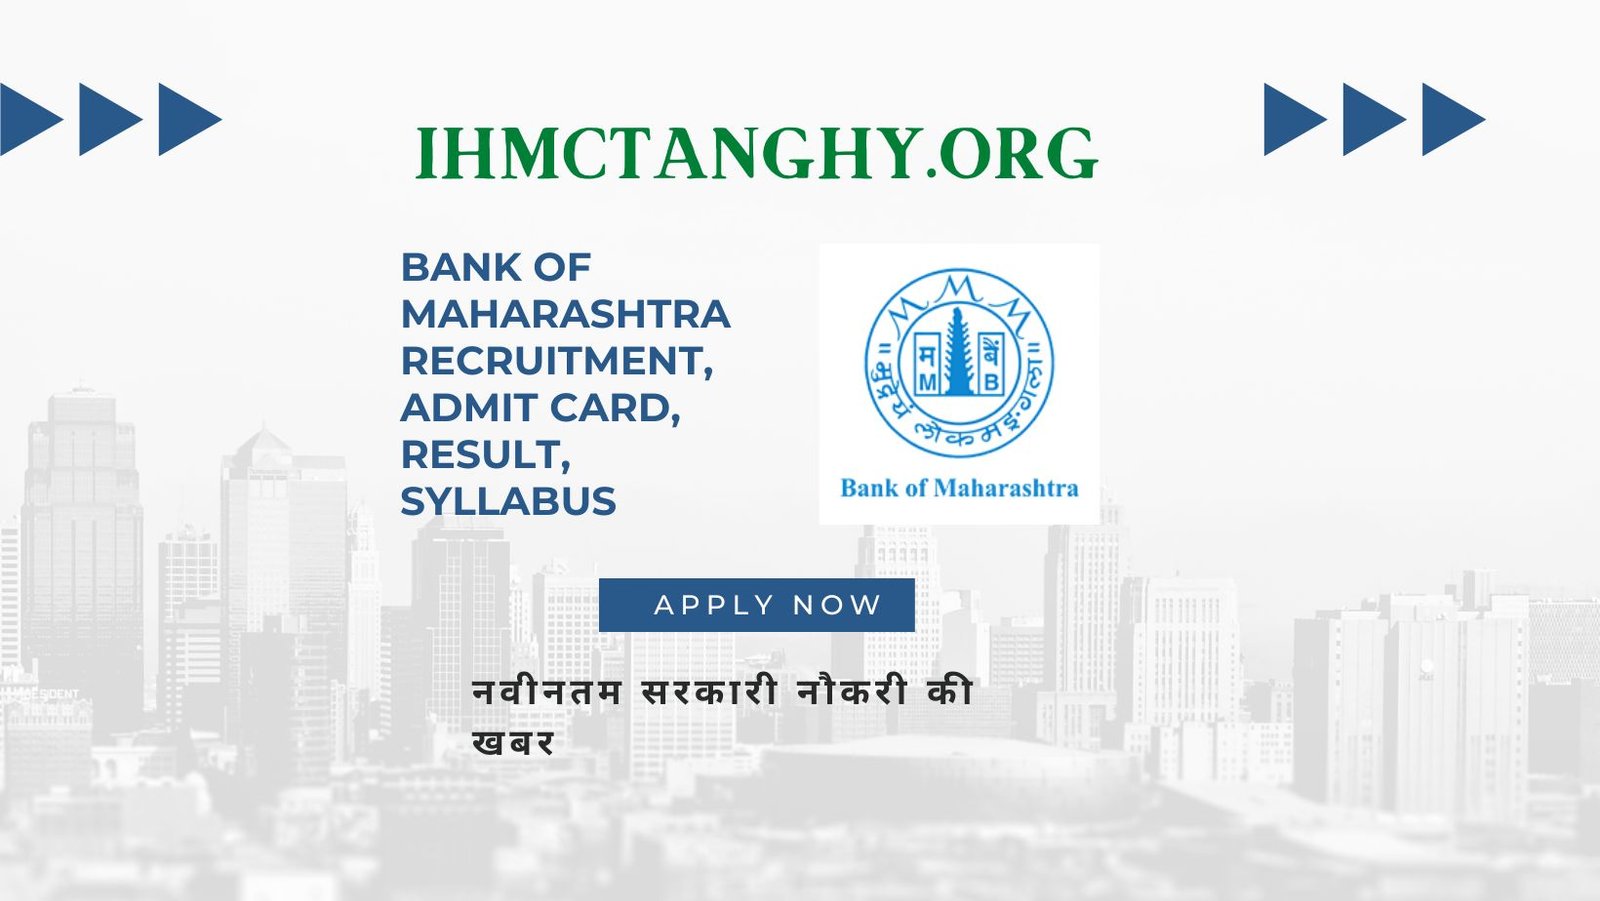 Bank Of Maharashtra Recruitment